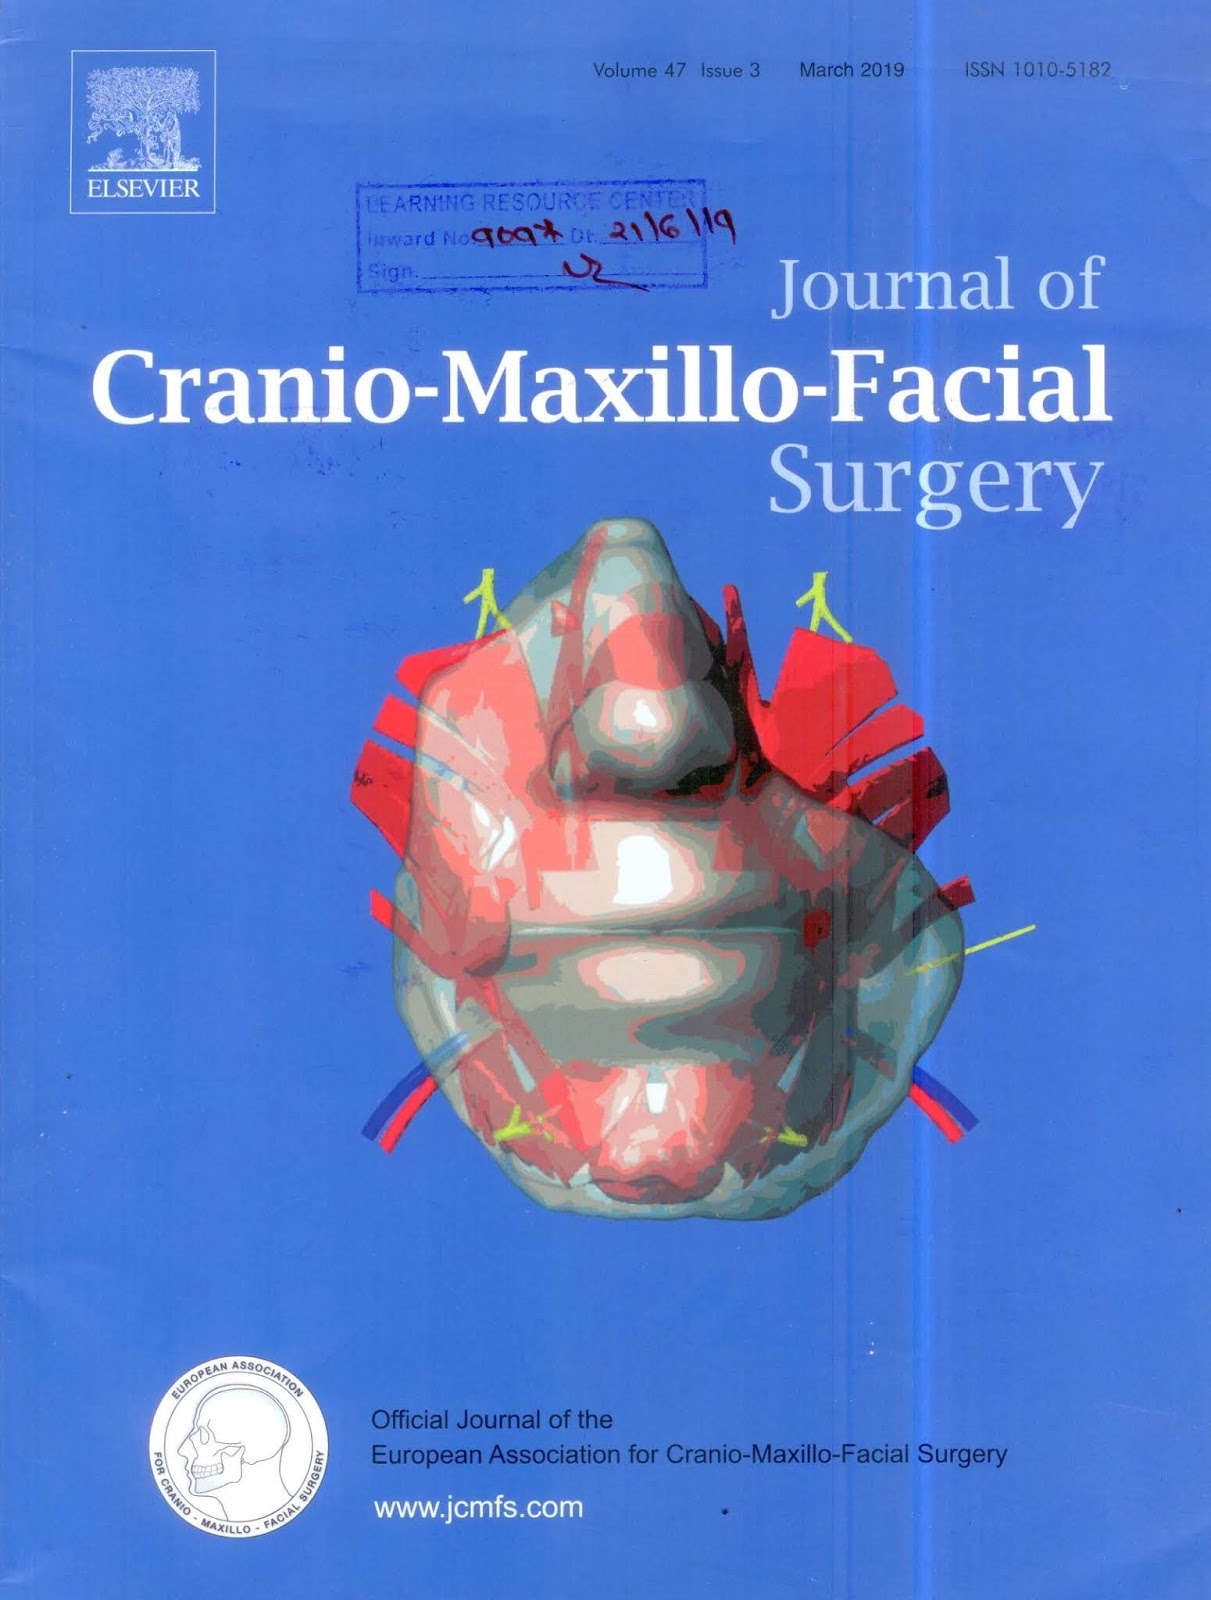 https://www.sciencedirect.com/journal/journal-of-cranio-maxillofacial-surgery/vol/47/issue/3